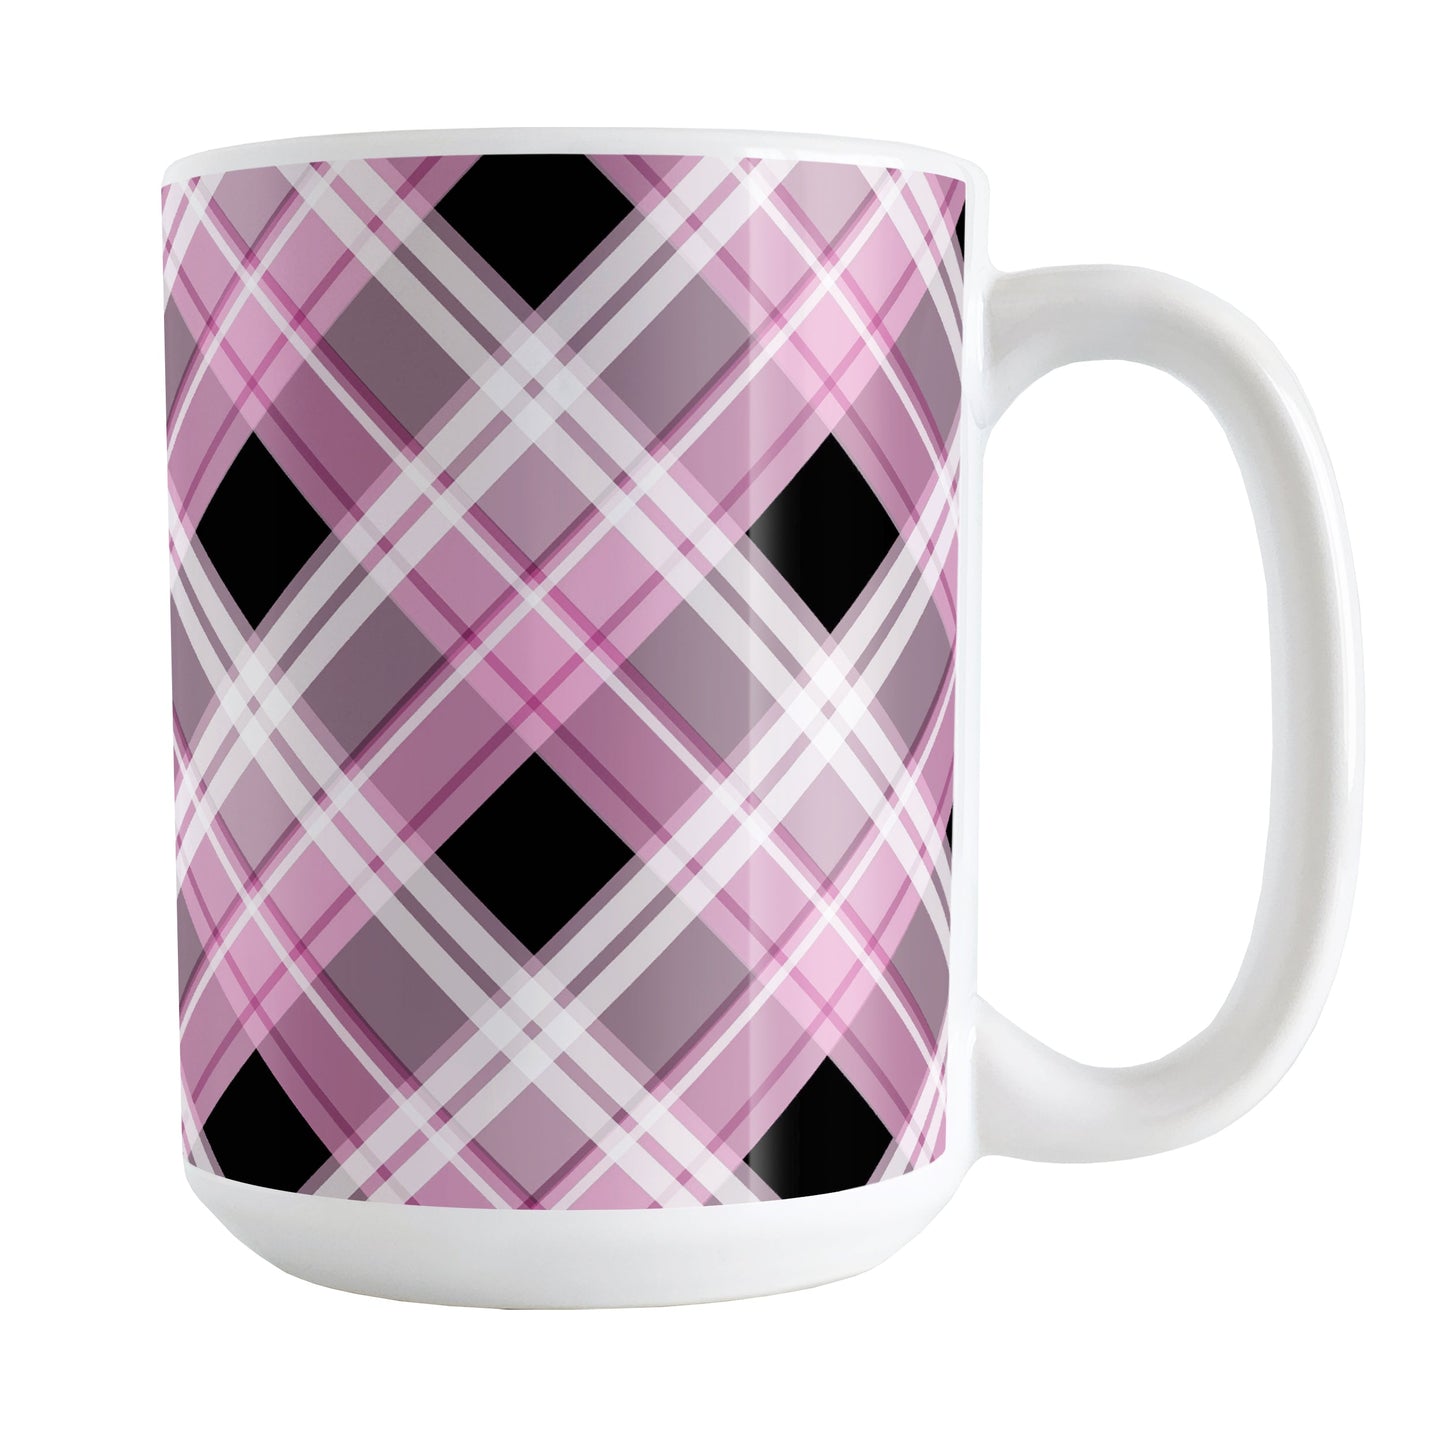 Alternative Pink Plaid Mug (15oz) at Amy's Coffee Mugs. A ceramic coffee mug designed with a diagonal pink, black, and white plaid pattern that wraps around the mug to the handle. Designed for someone who loves plaid patterns and the colors pink and black together.